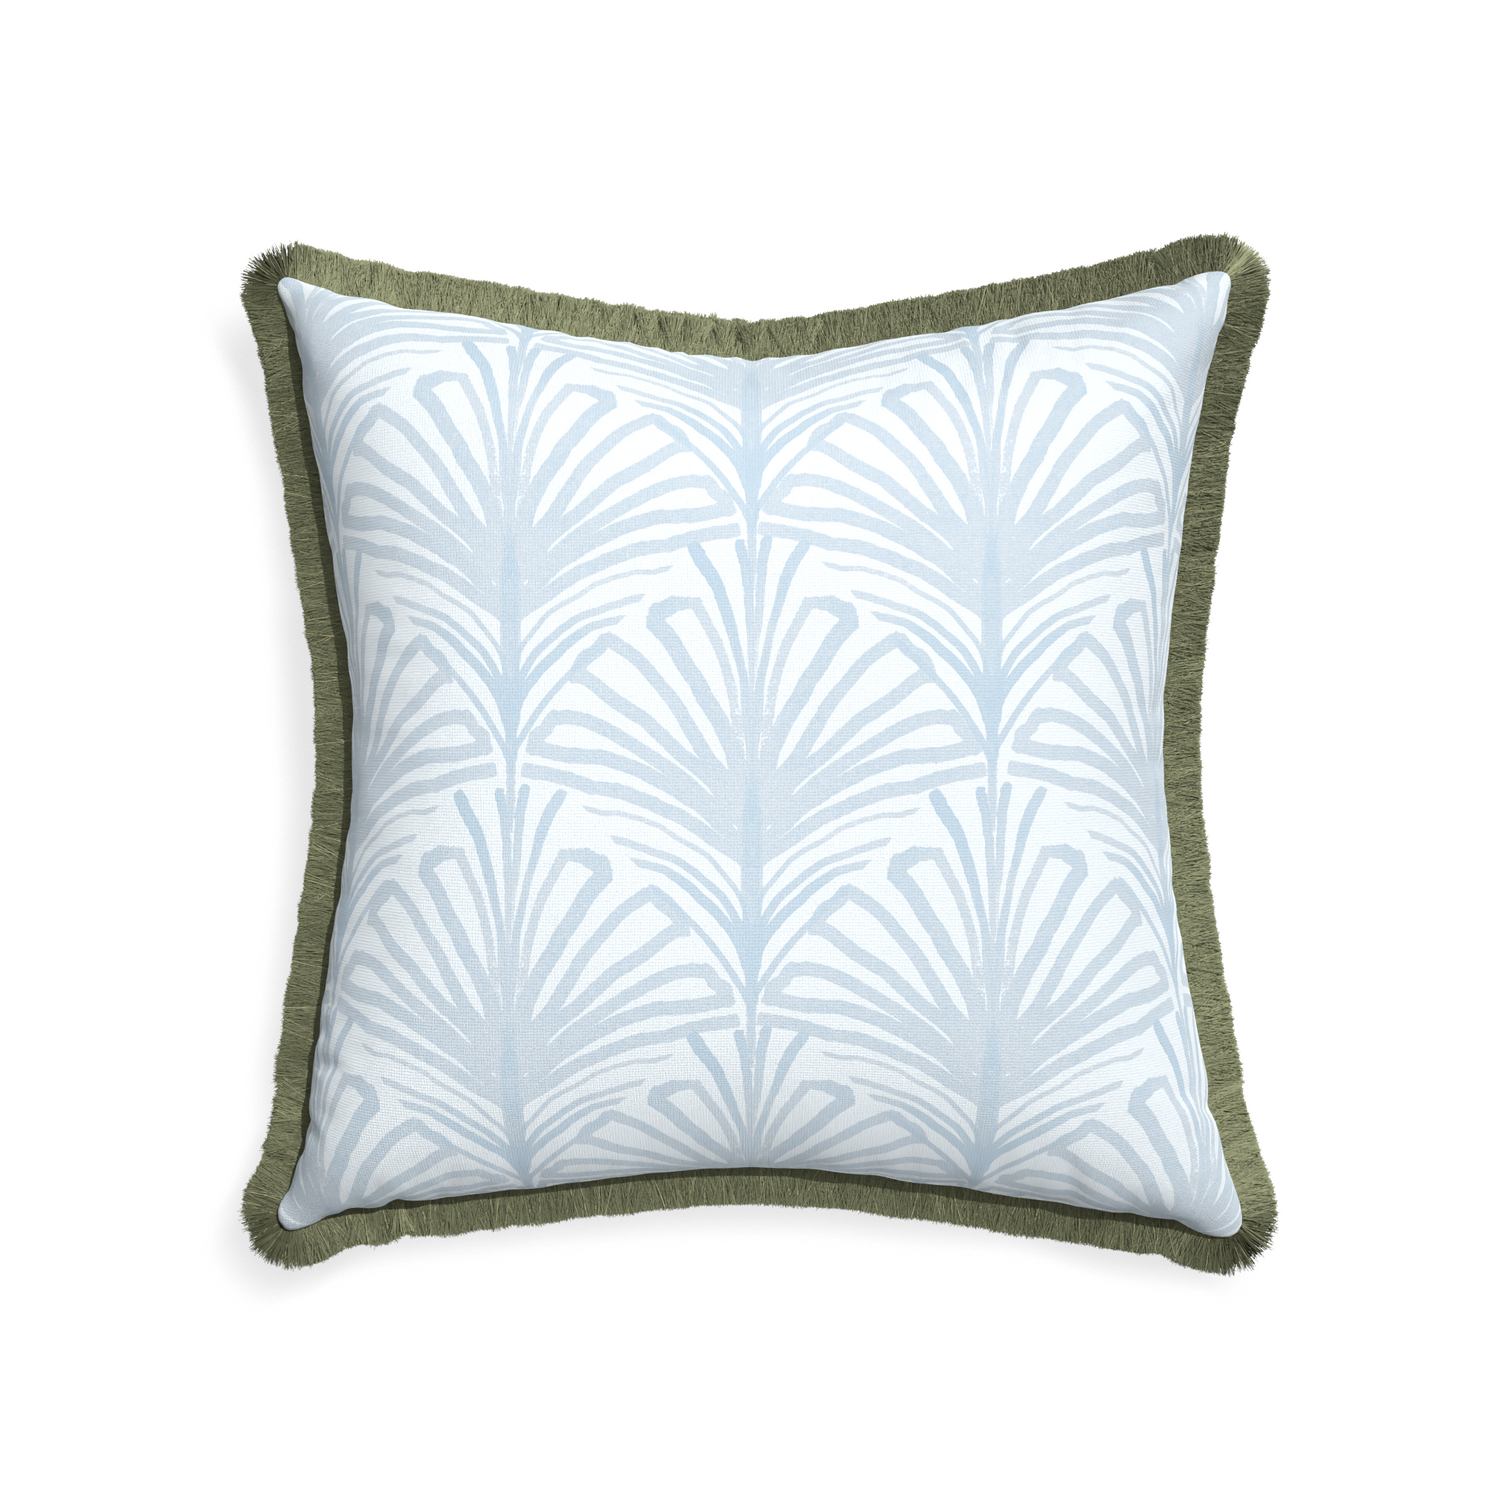 22-square suzy sky custom pillow with sage fringe on white background